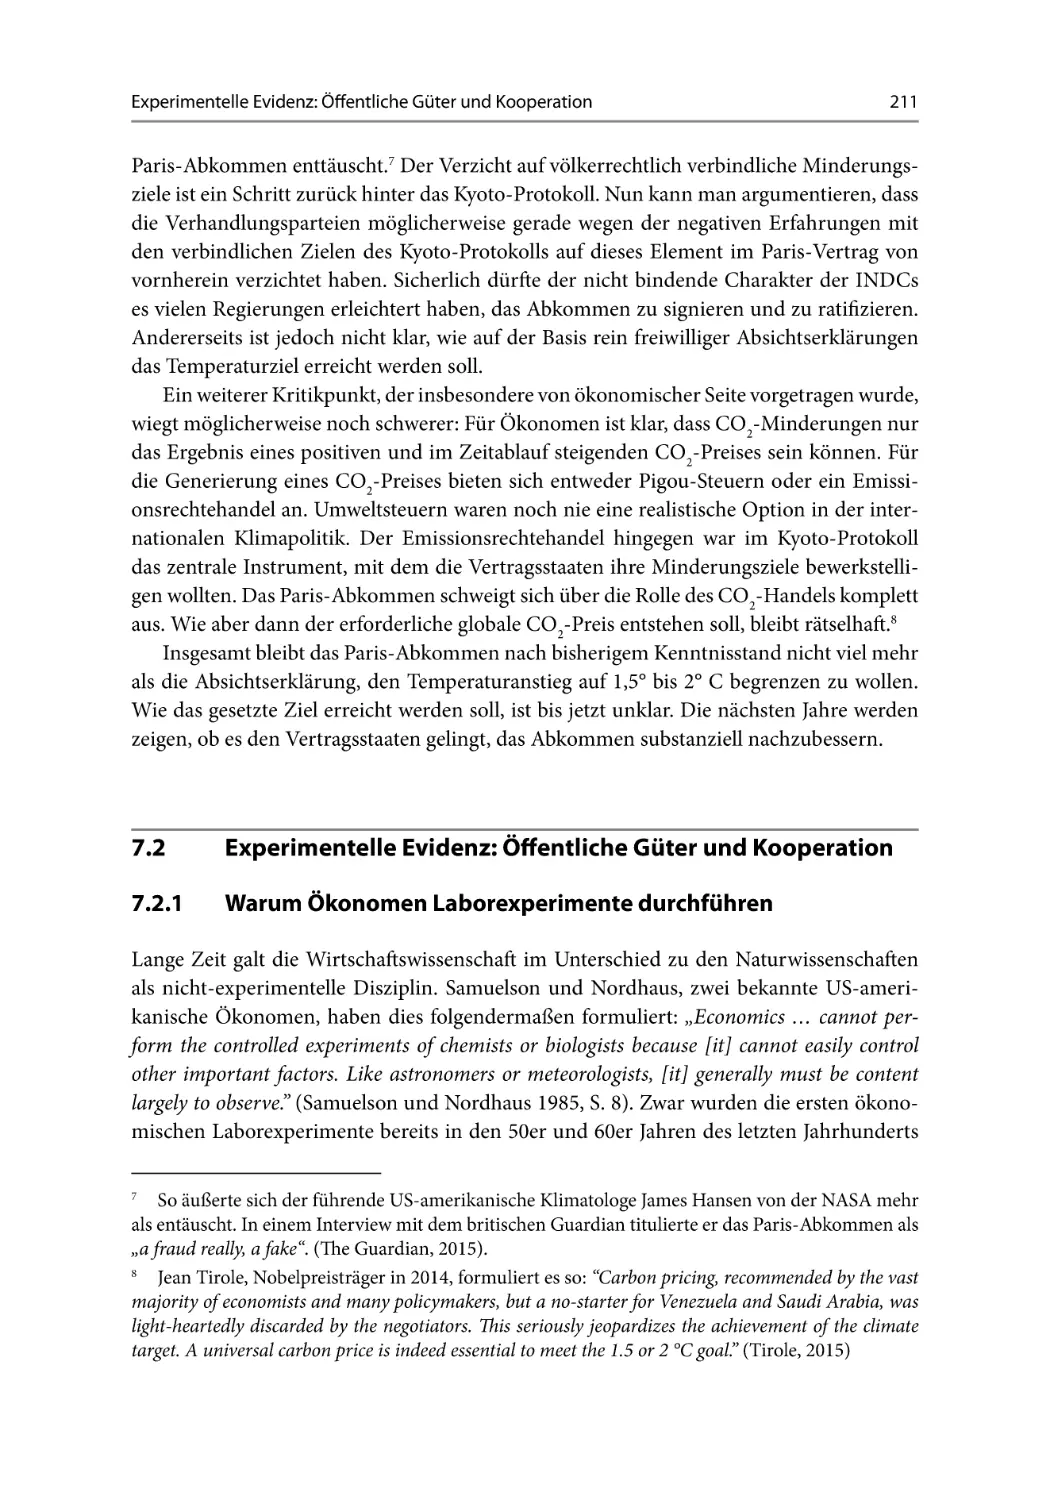 7.2 Experimentelle Evidenz
7.2.1 Warum Ökonomen Laborexperimente durchführen